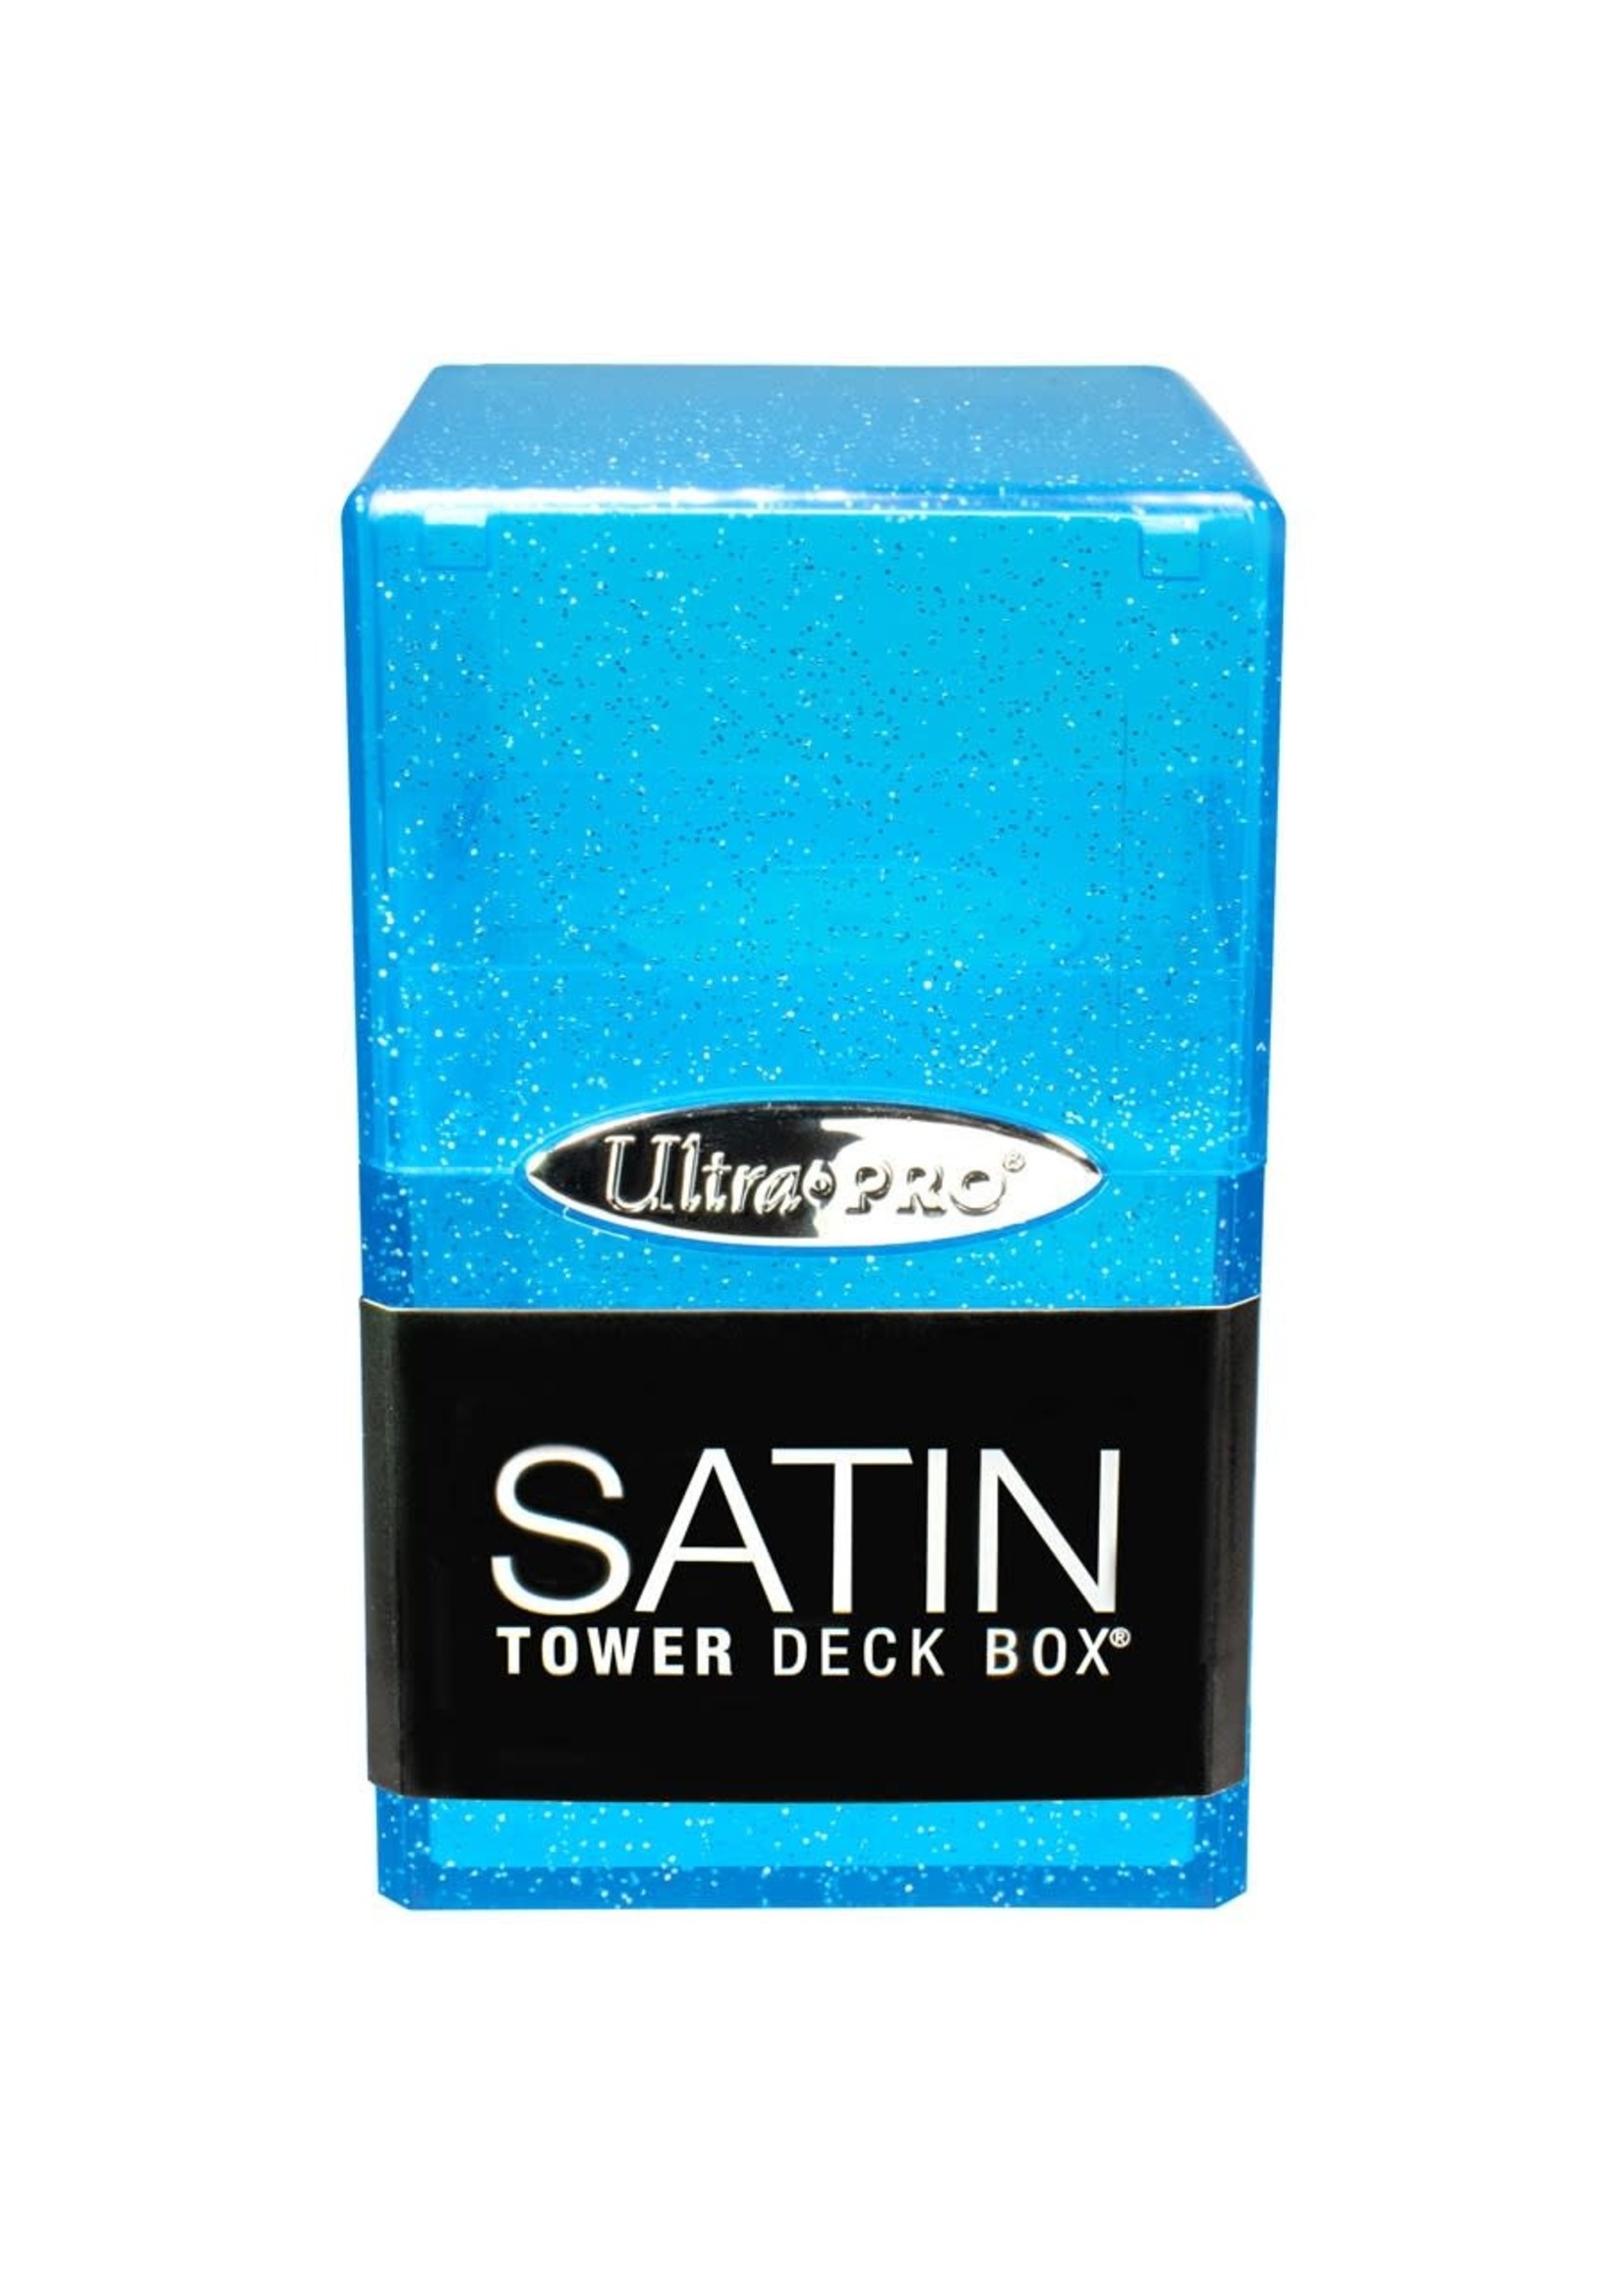 Ultra Pro Satin Tower Deck Box: Glitter Blue